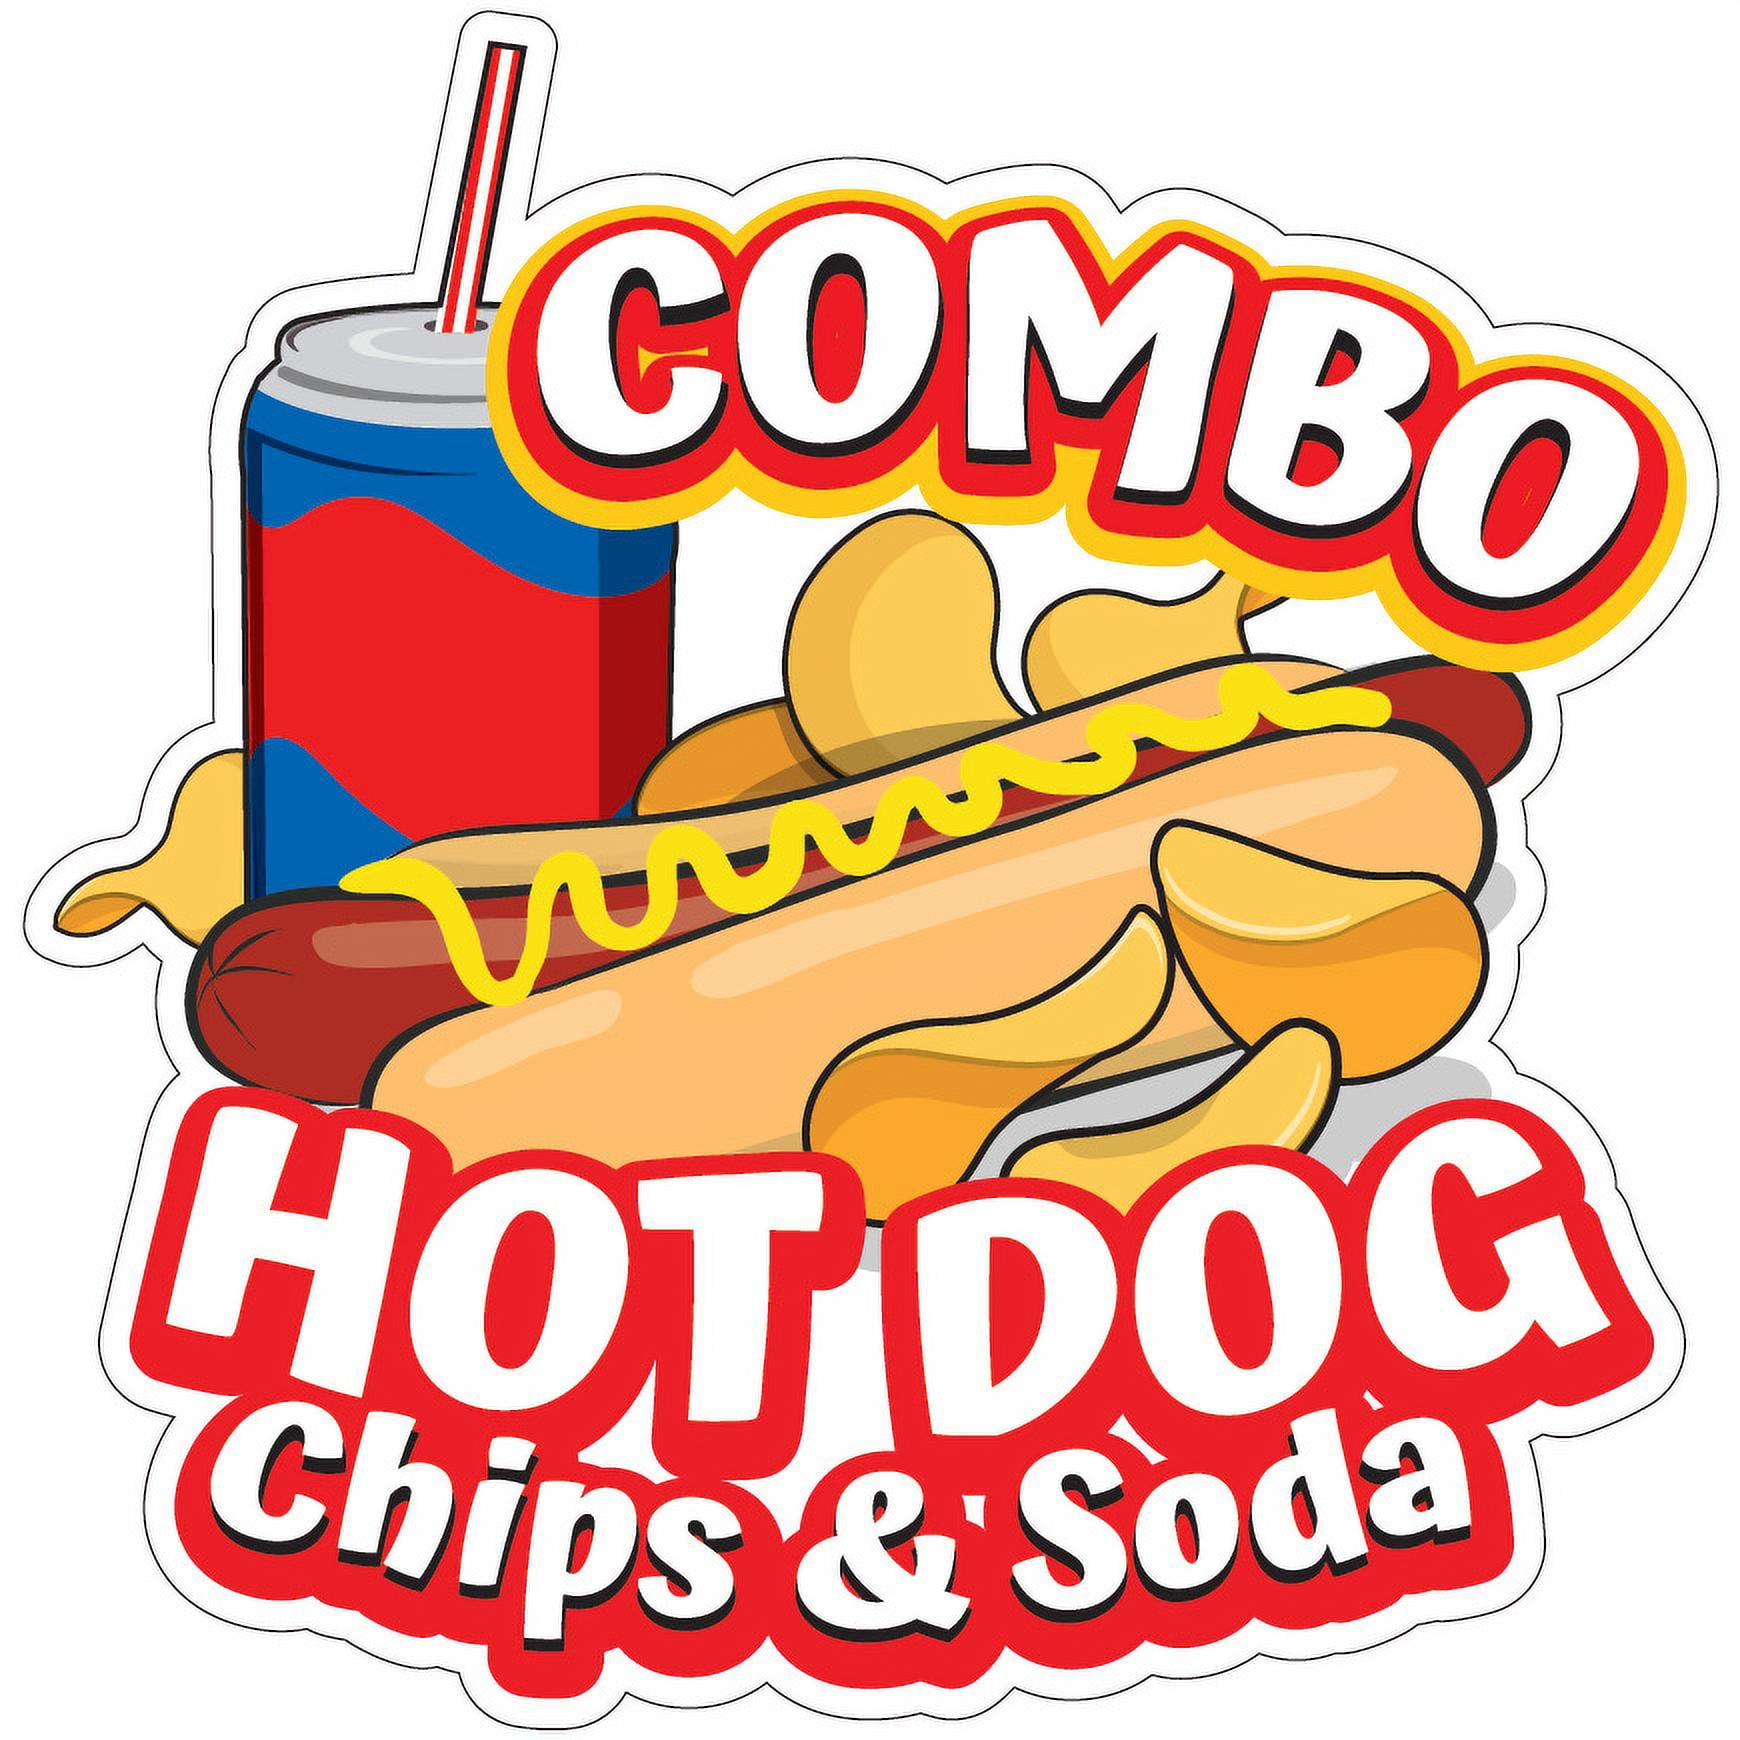 All Beef Hot Dogs 14" Hotdogs Restaurant Concession Food Truck Vinyl Sticker 